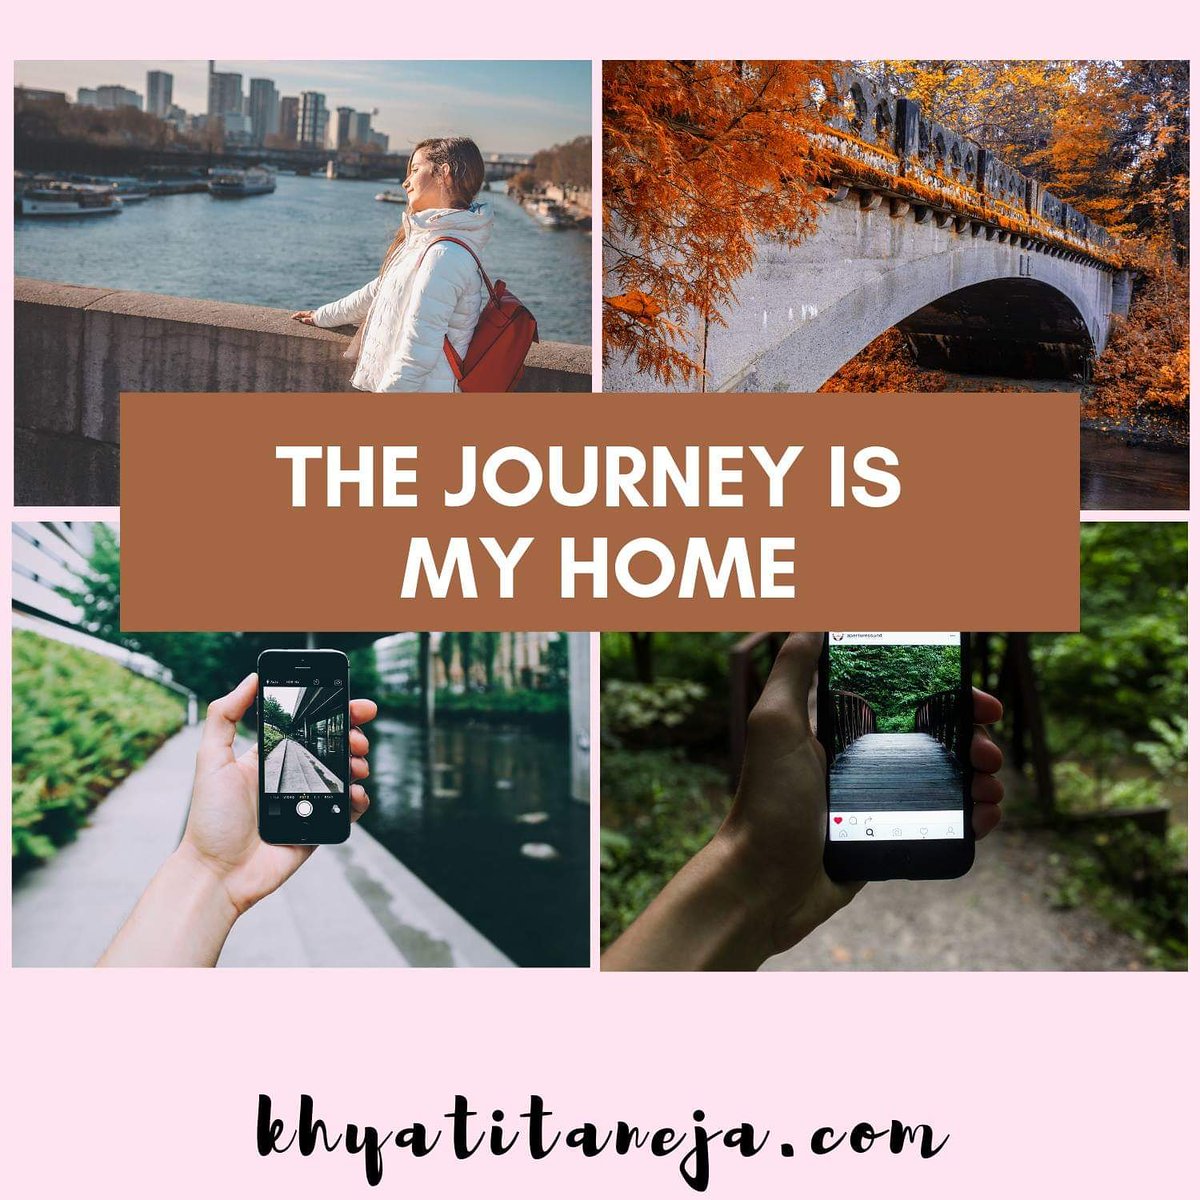 The journey is my home. - Muriel Rukeyser
#LadiesLoveTravel #SundayThoughts #Quote #BackpackersintheWorld #TravelLifestyle #KhyatiTaneja